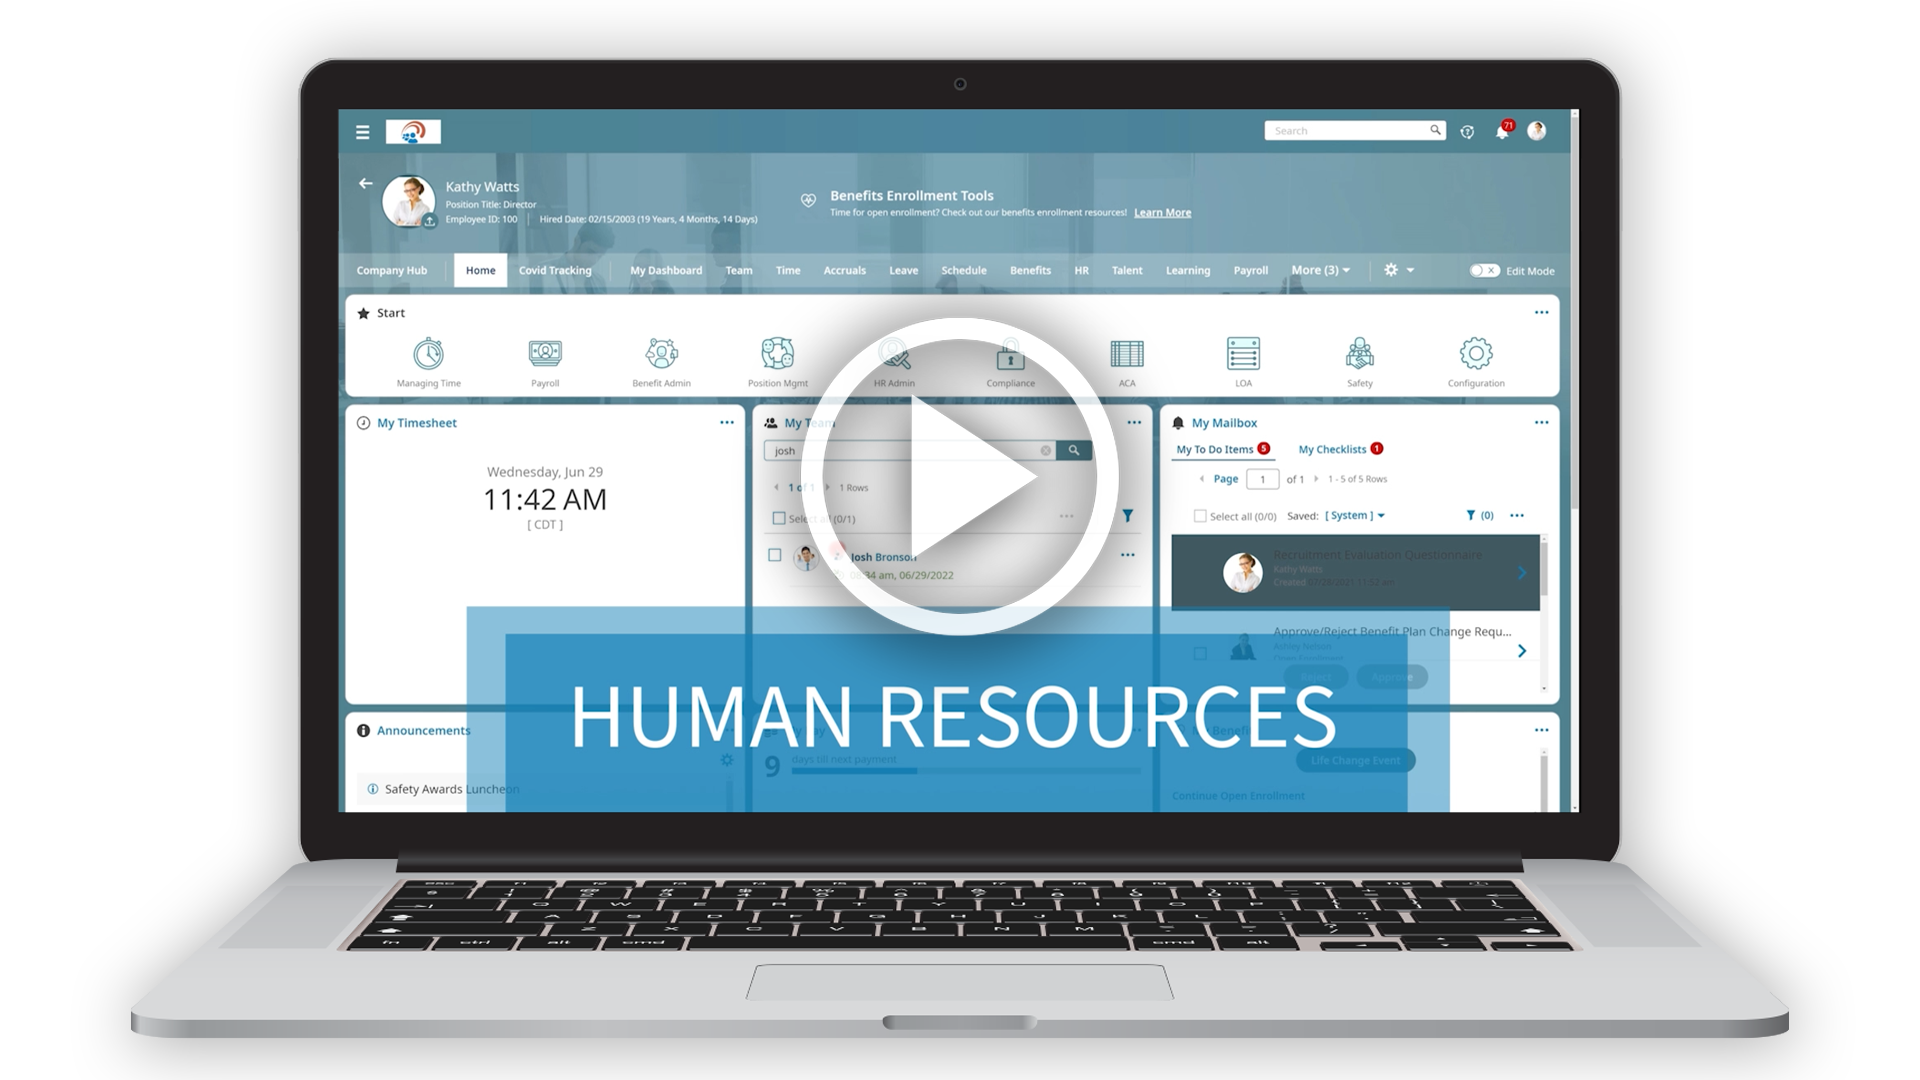 HR Software Demo Video Thumbnail